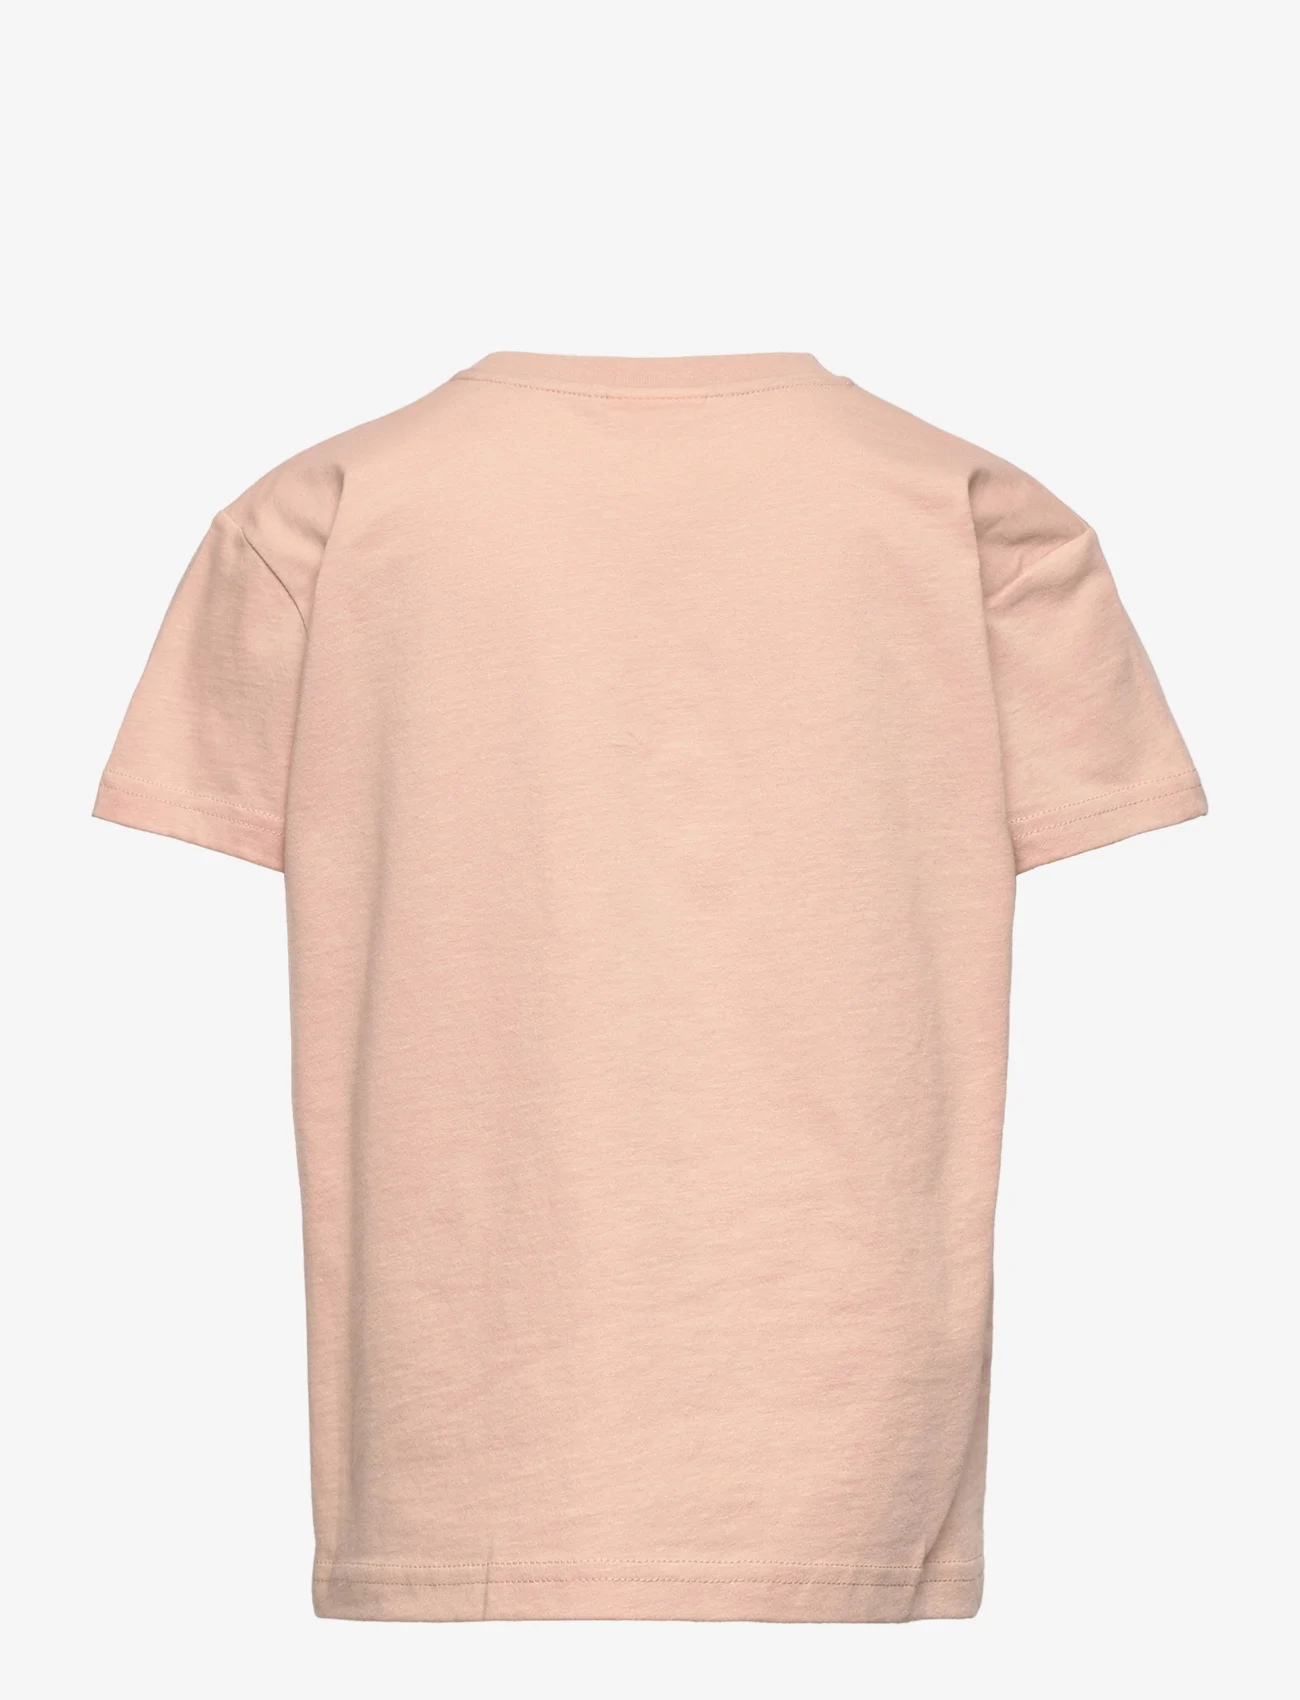 Sofie Schnoor Baby and Kids - T-shirt - kortermede t-skjorter - light rose - 1